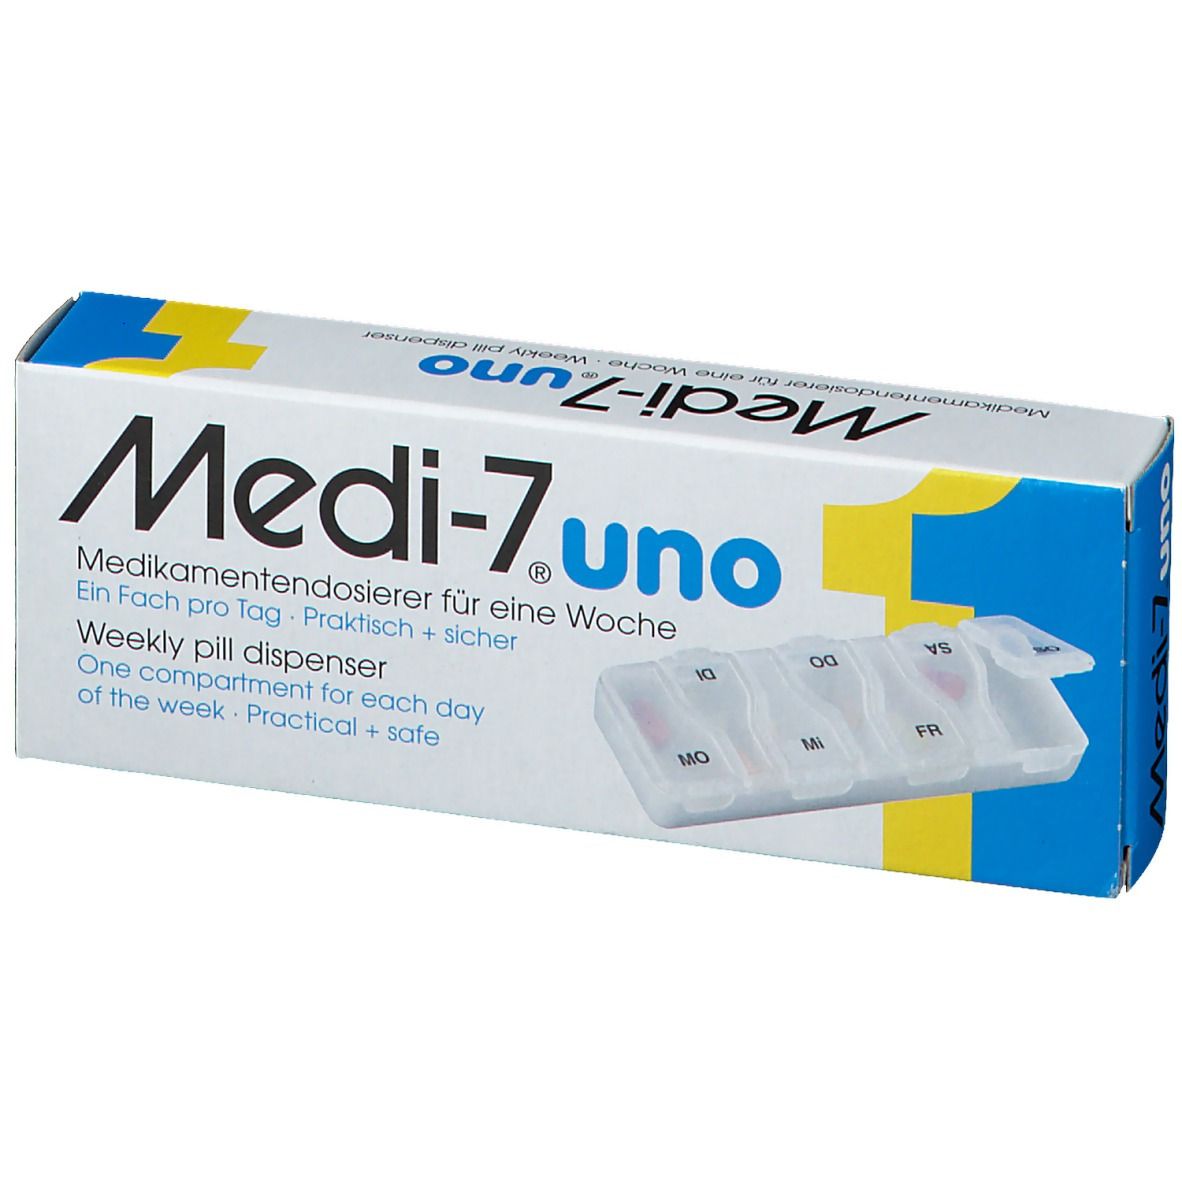 Medi-7 Uno Medikamenten Dosierer